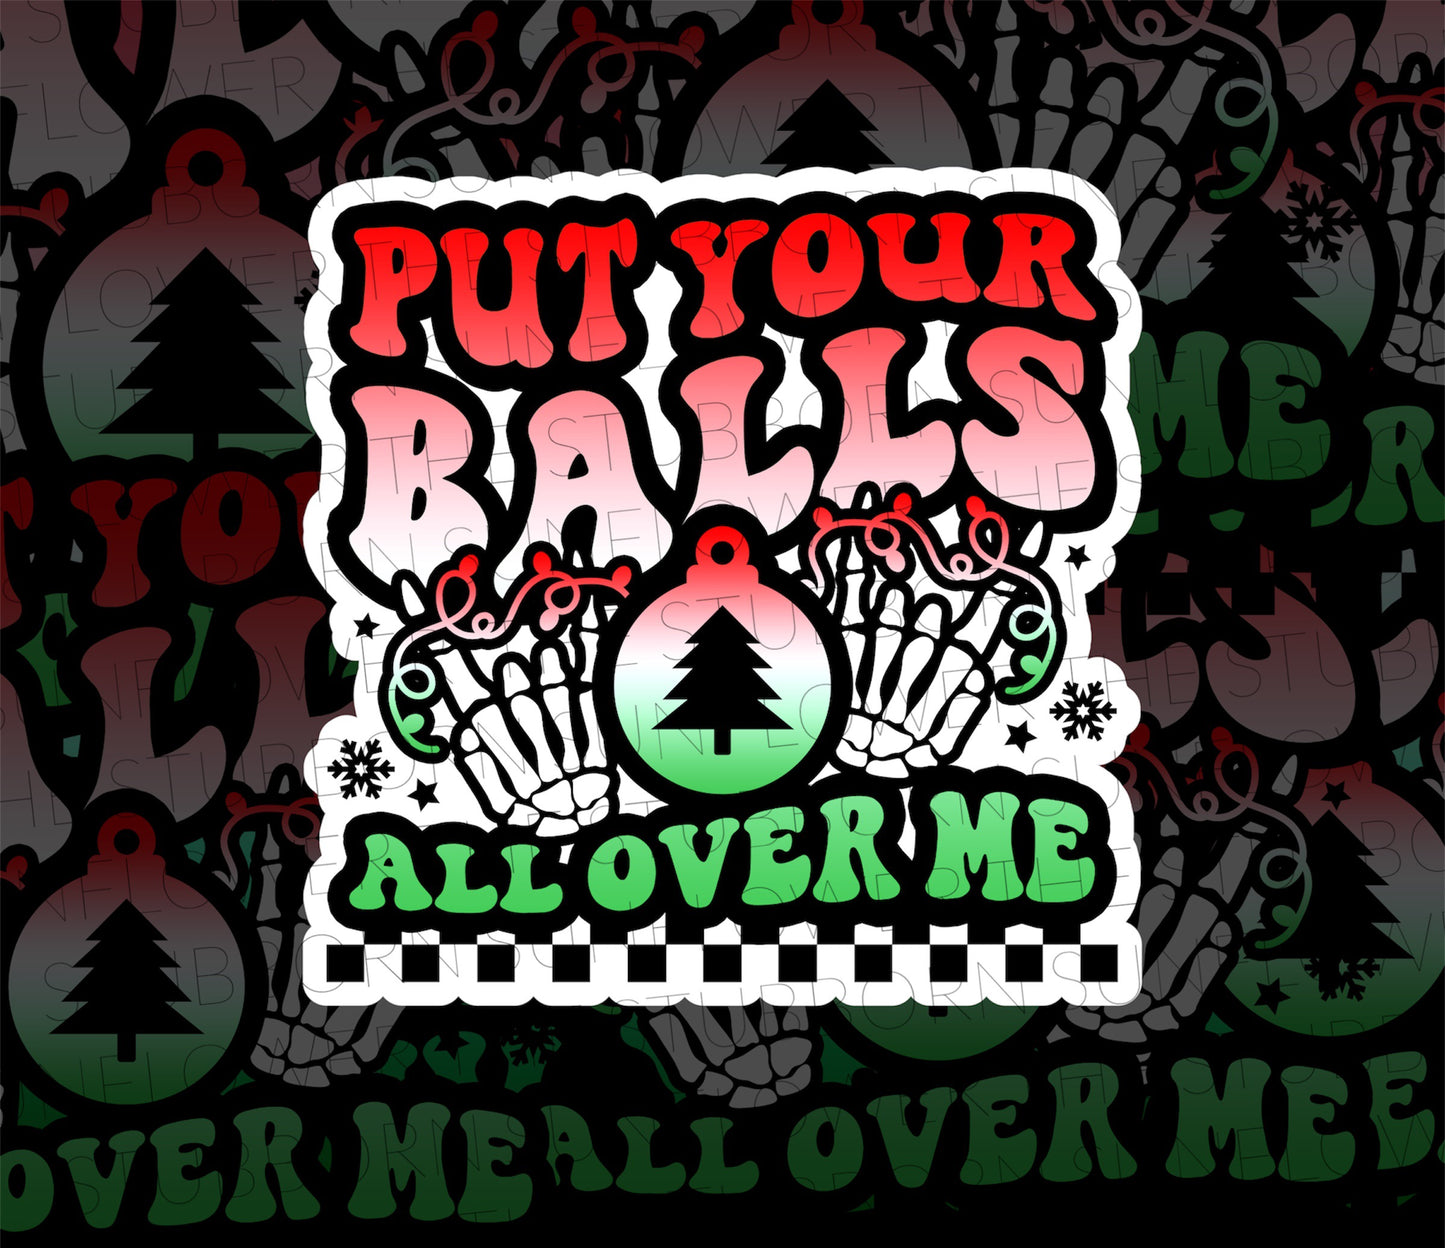 Balls All Over Me Sticker